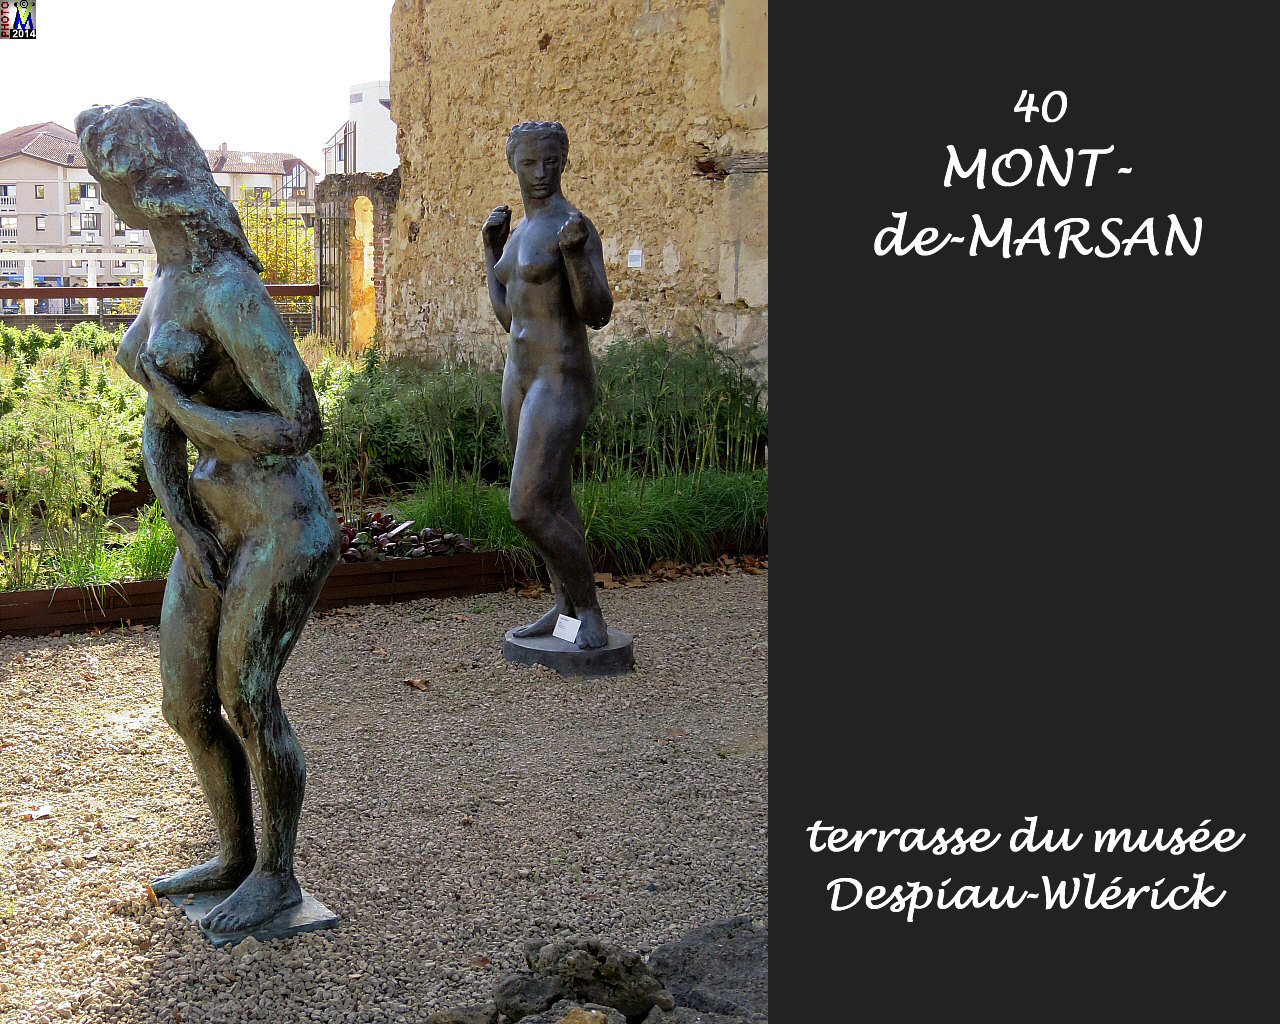 40MONT-MARSAN_terrassemusee_106.jpg